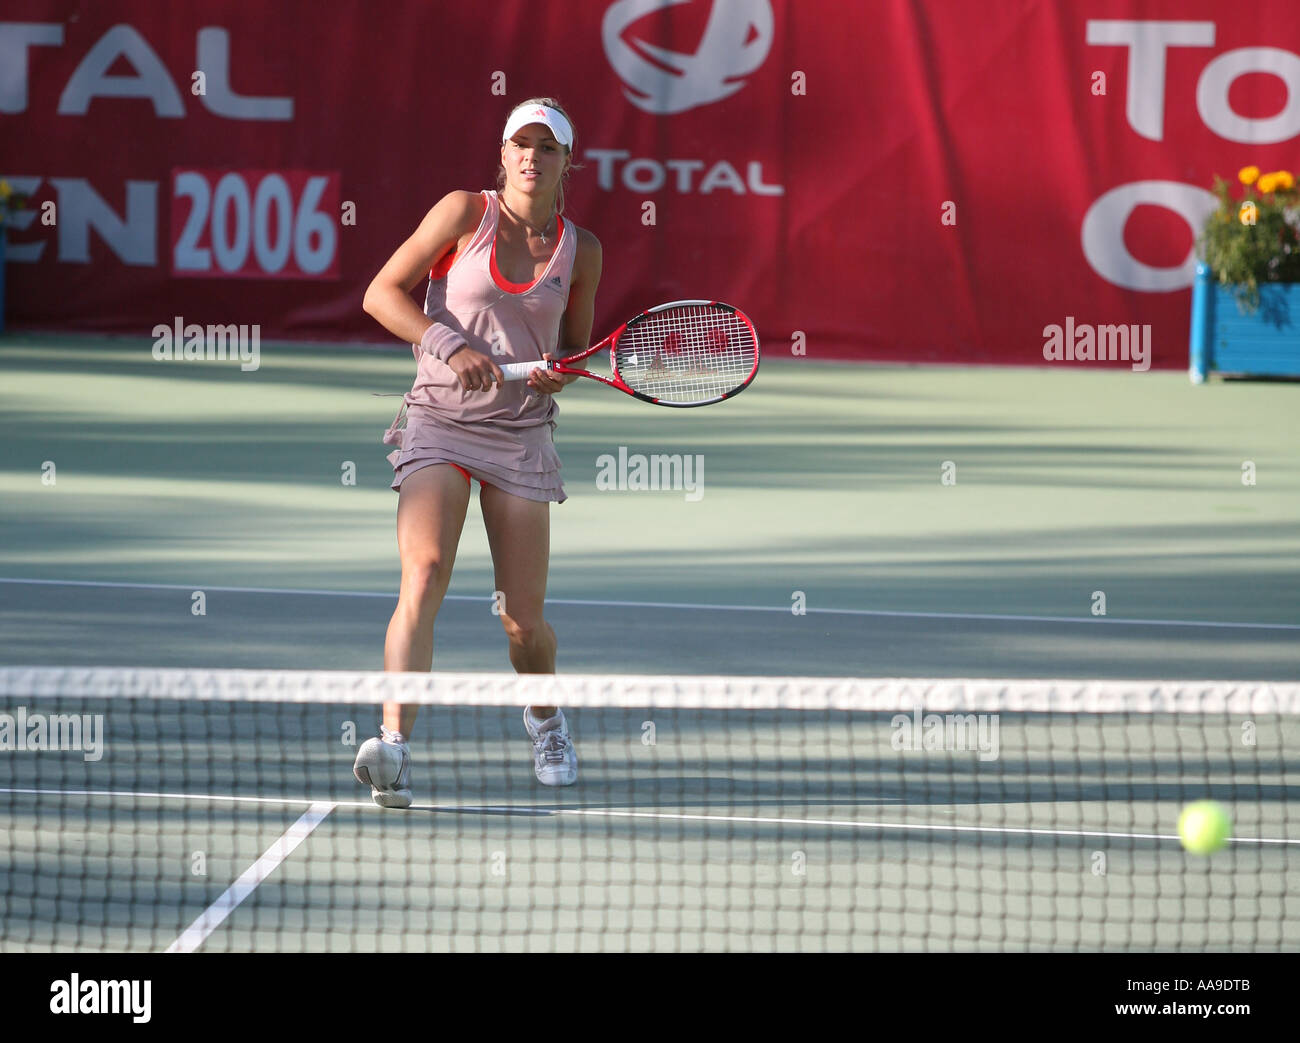 Maria Kirilenko in action at Doha Total Open, 2006 Stock Photo